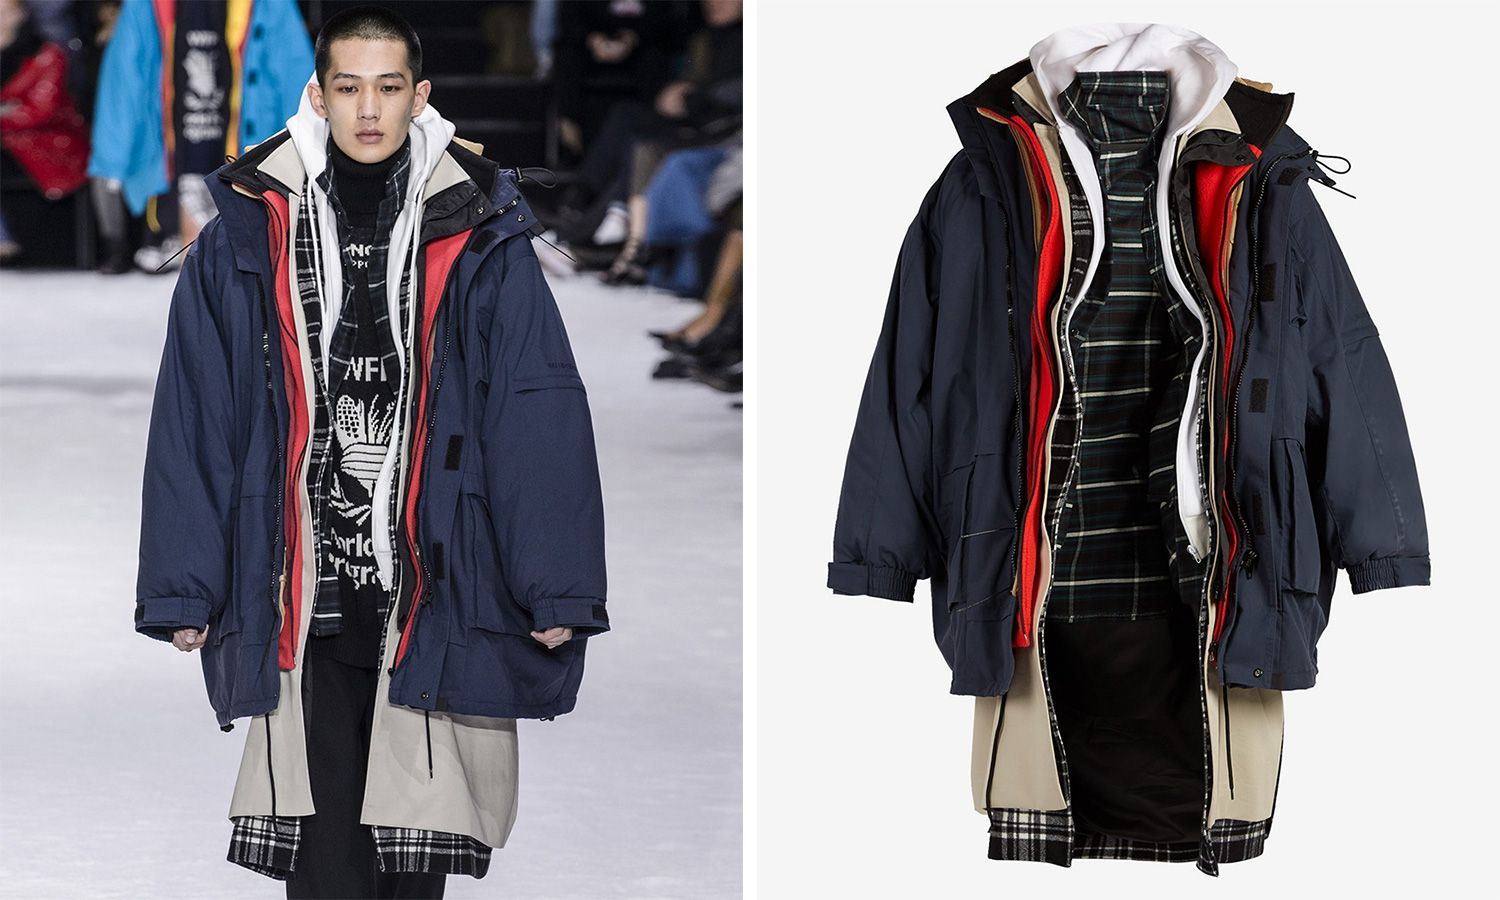 Big Jacket Fashion Trend Inspires Memes: Joey, Balenciaga